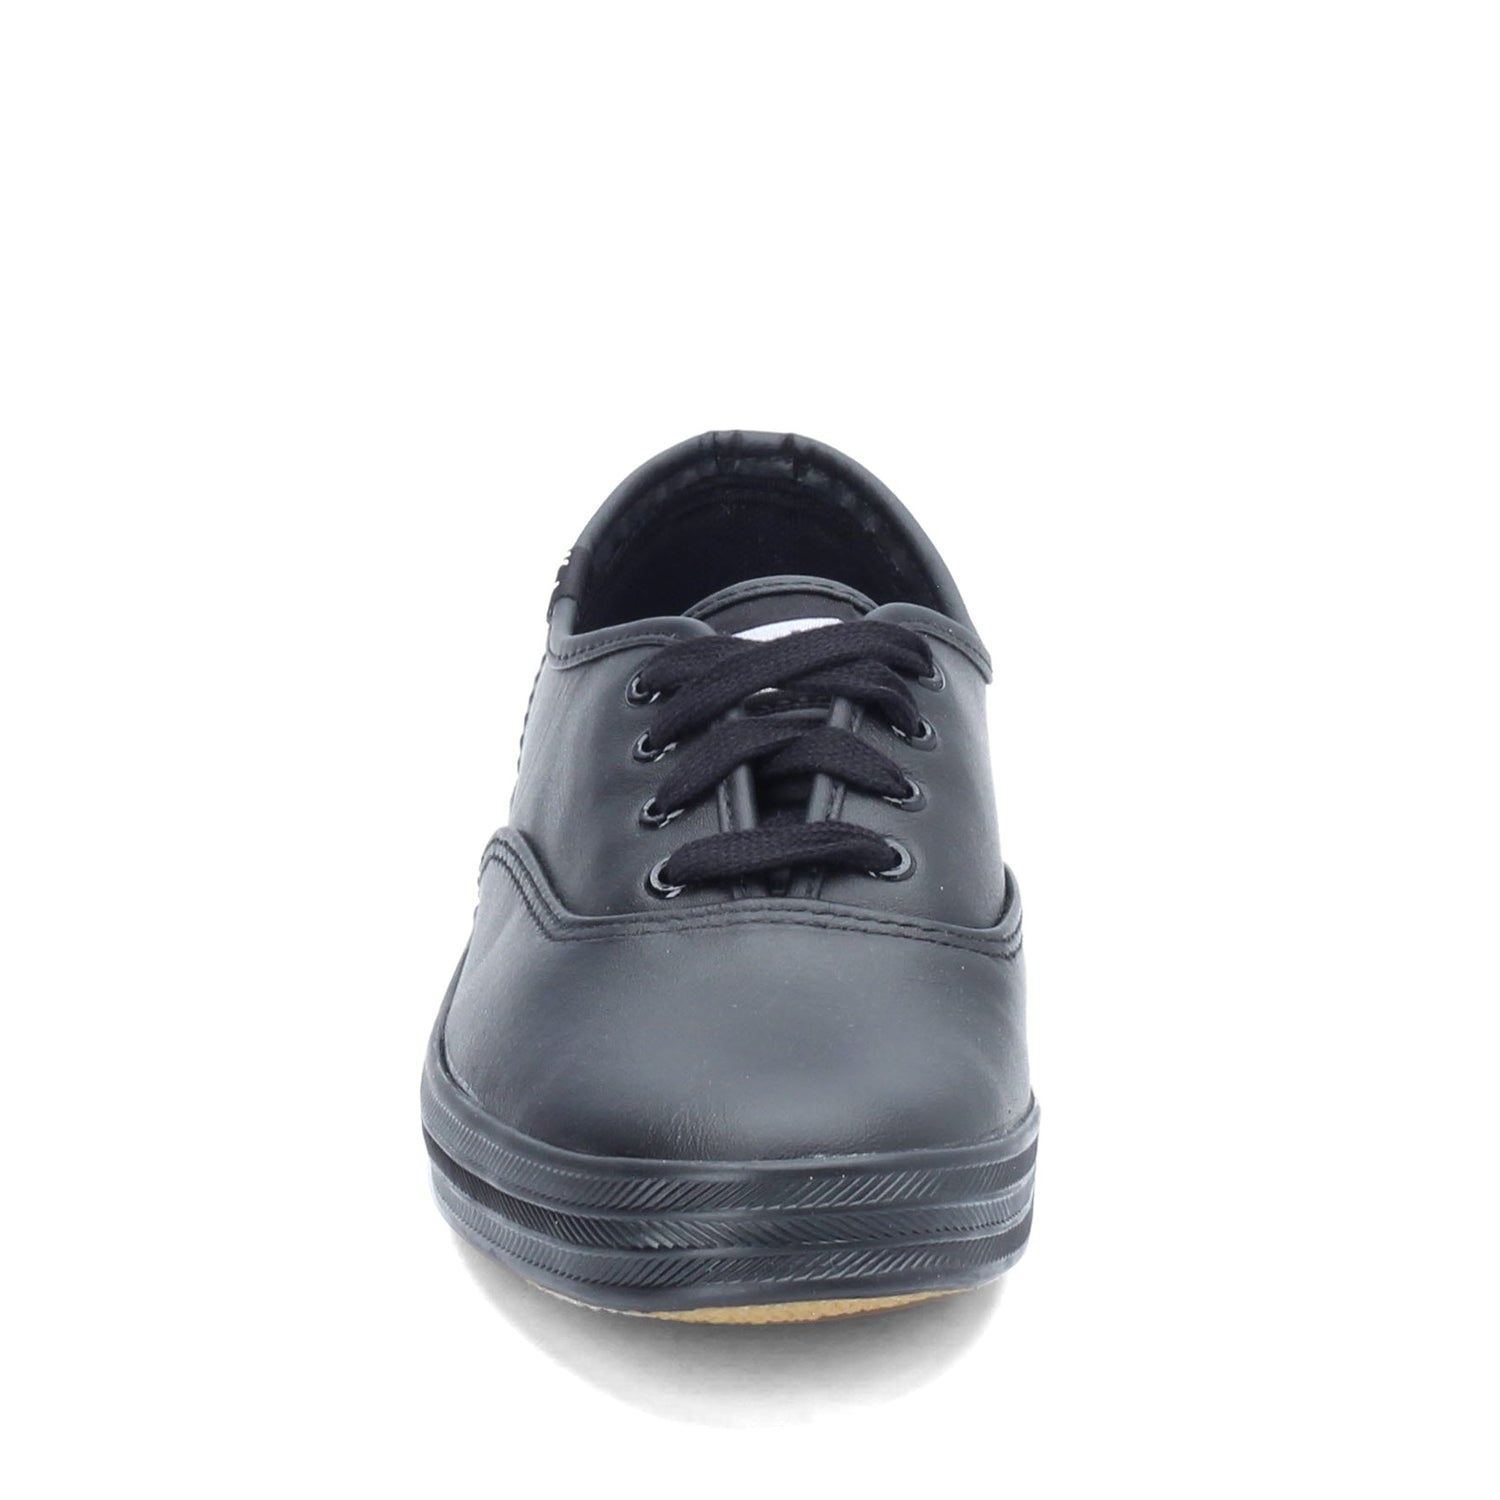 Peltz Shoes  Women's Keds Champion Leather Sneaker BLACK LEATHER WH45780